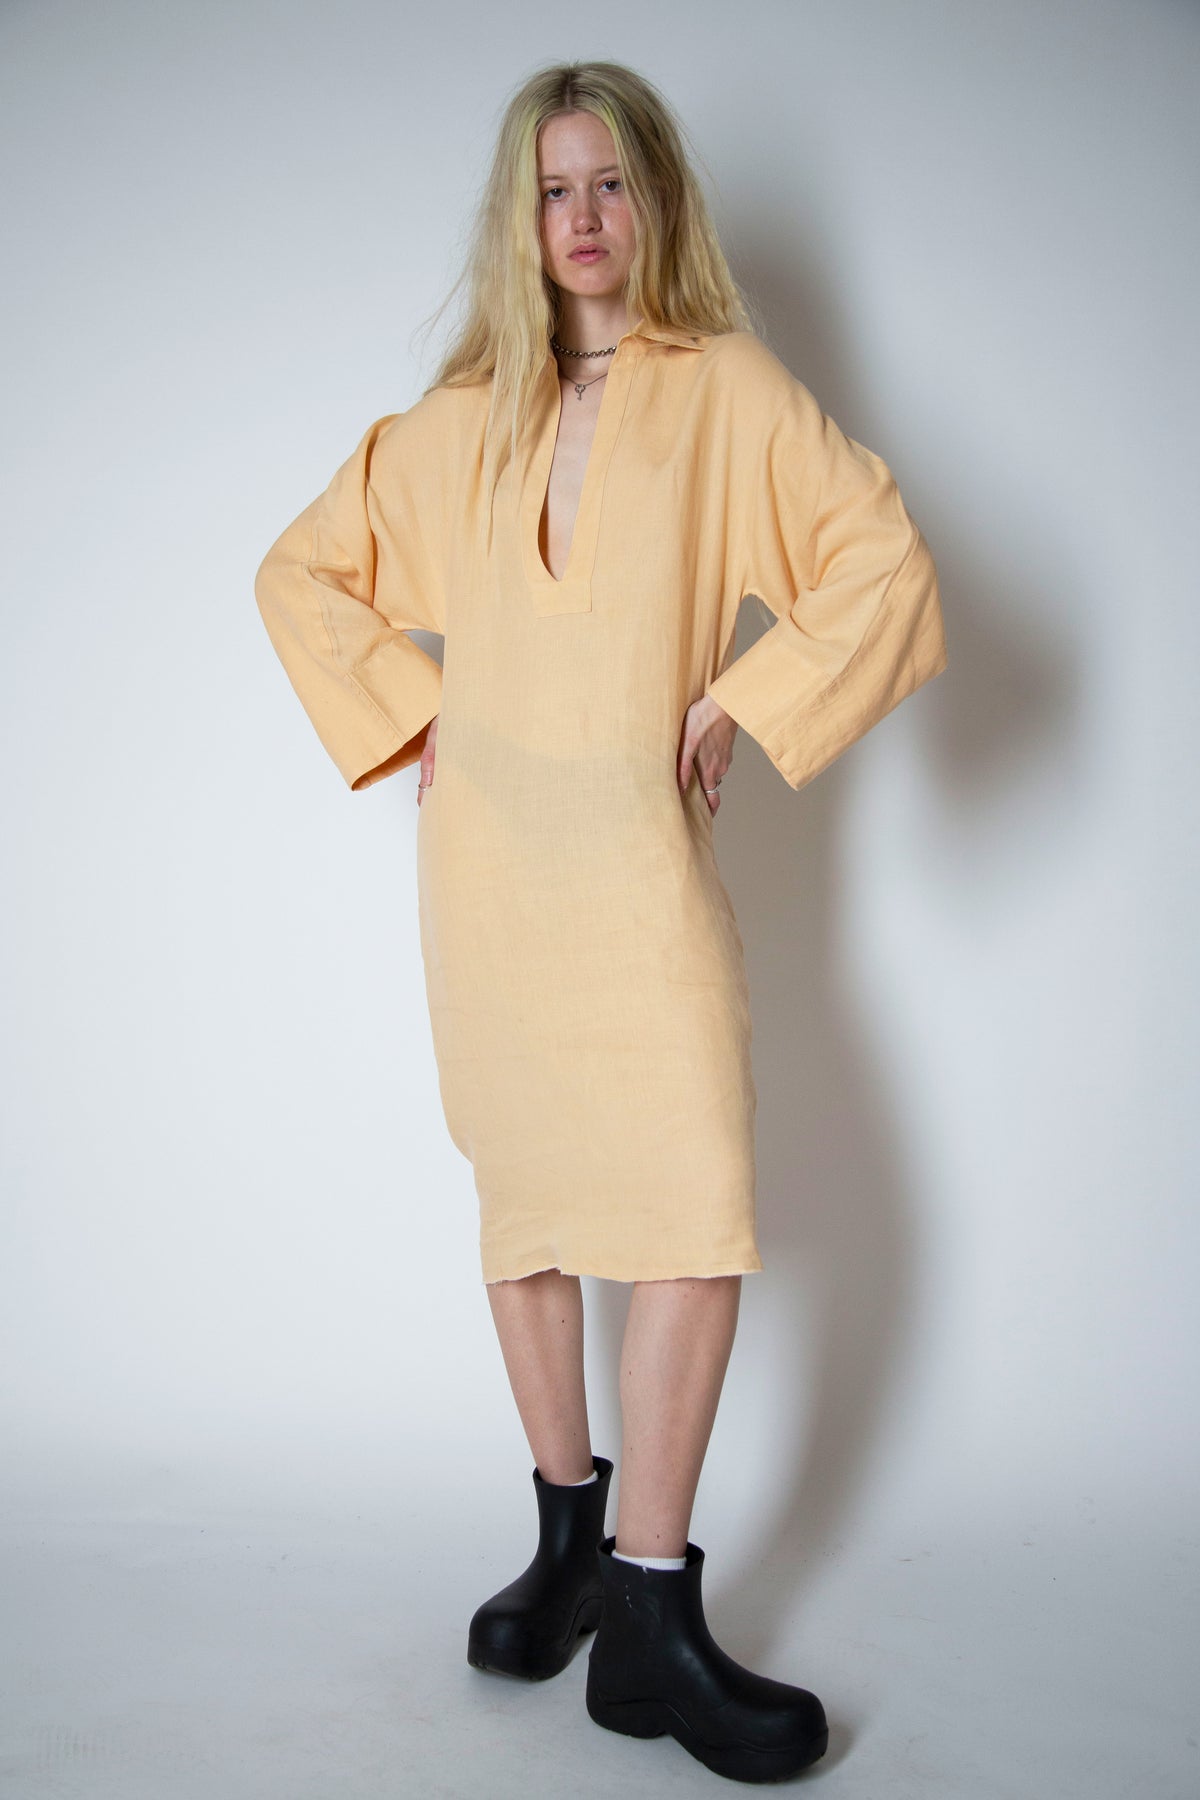 Yves Saint Laurent tunic dress